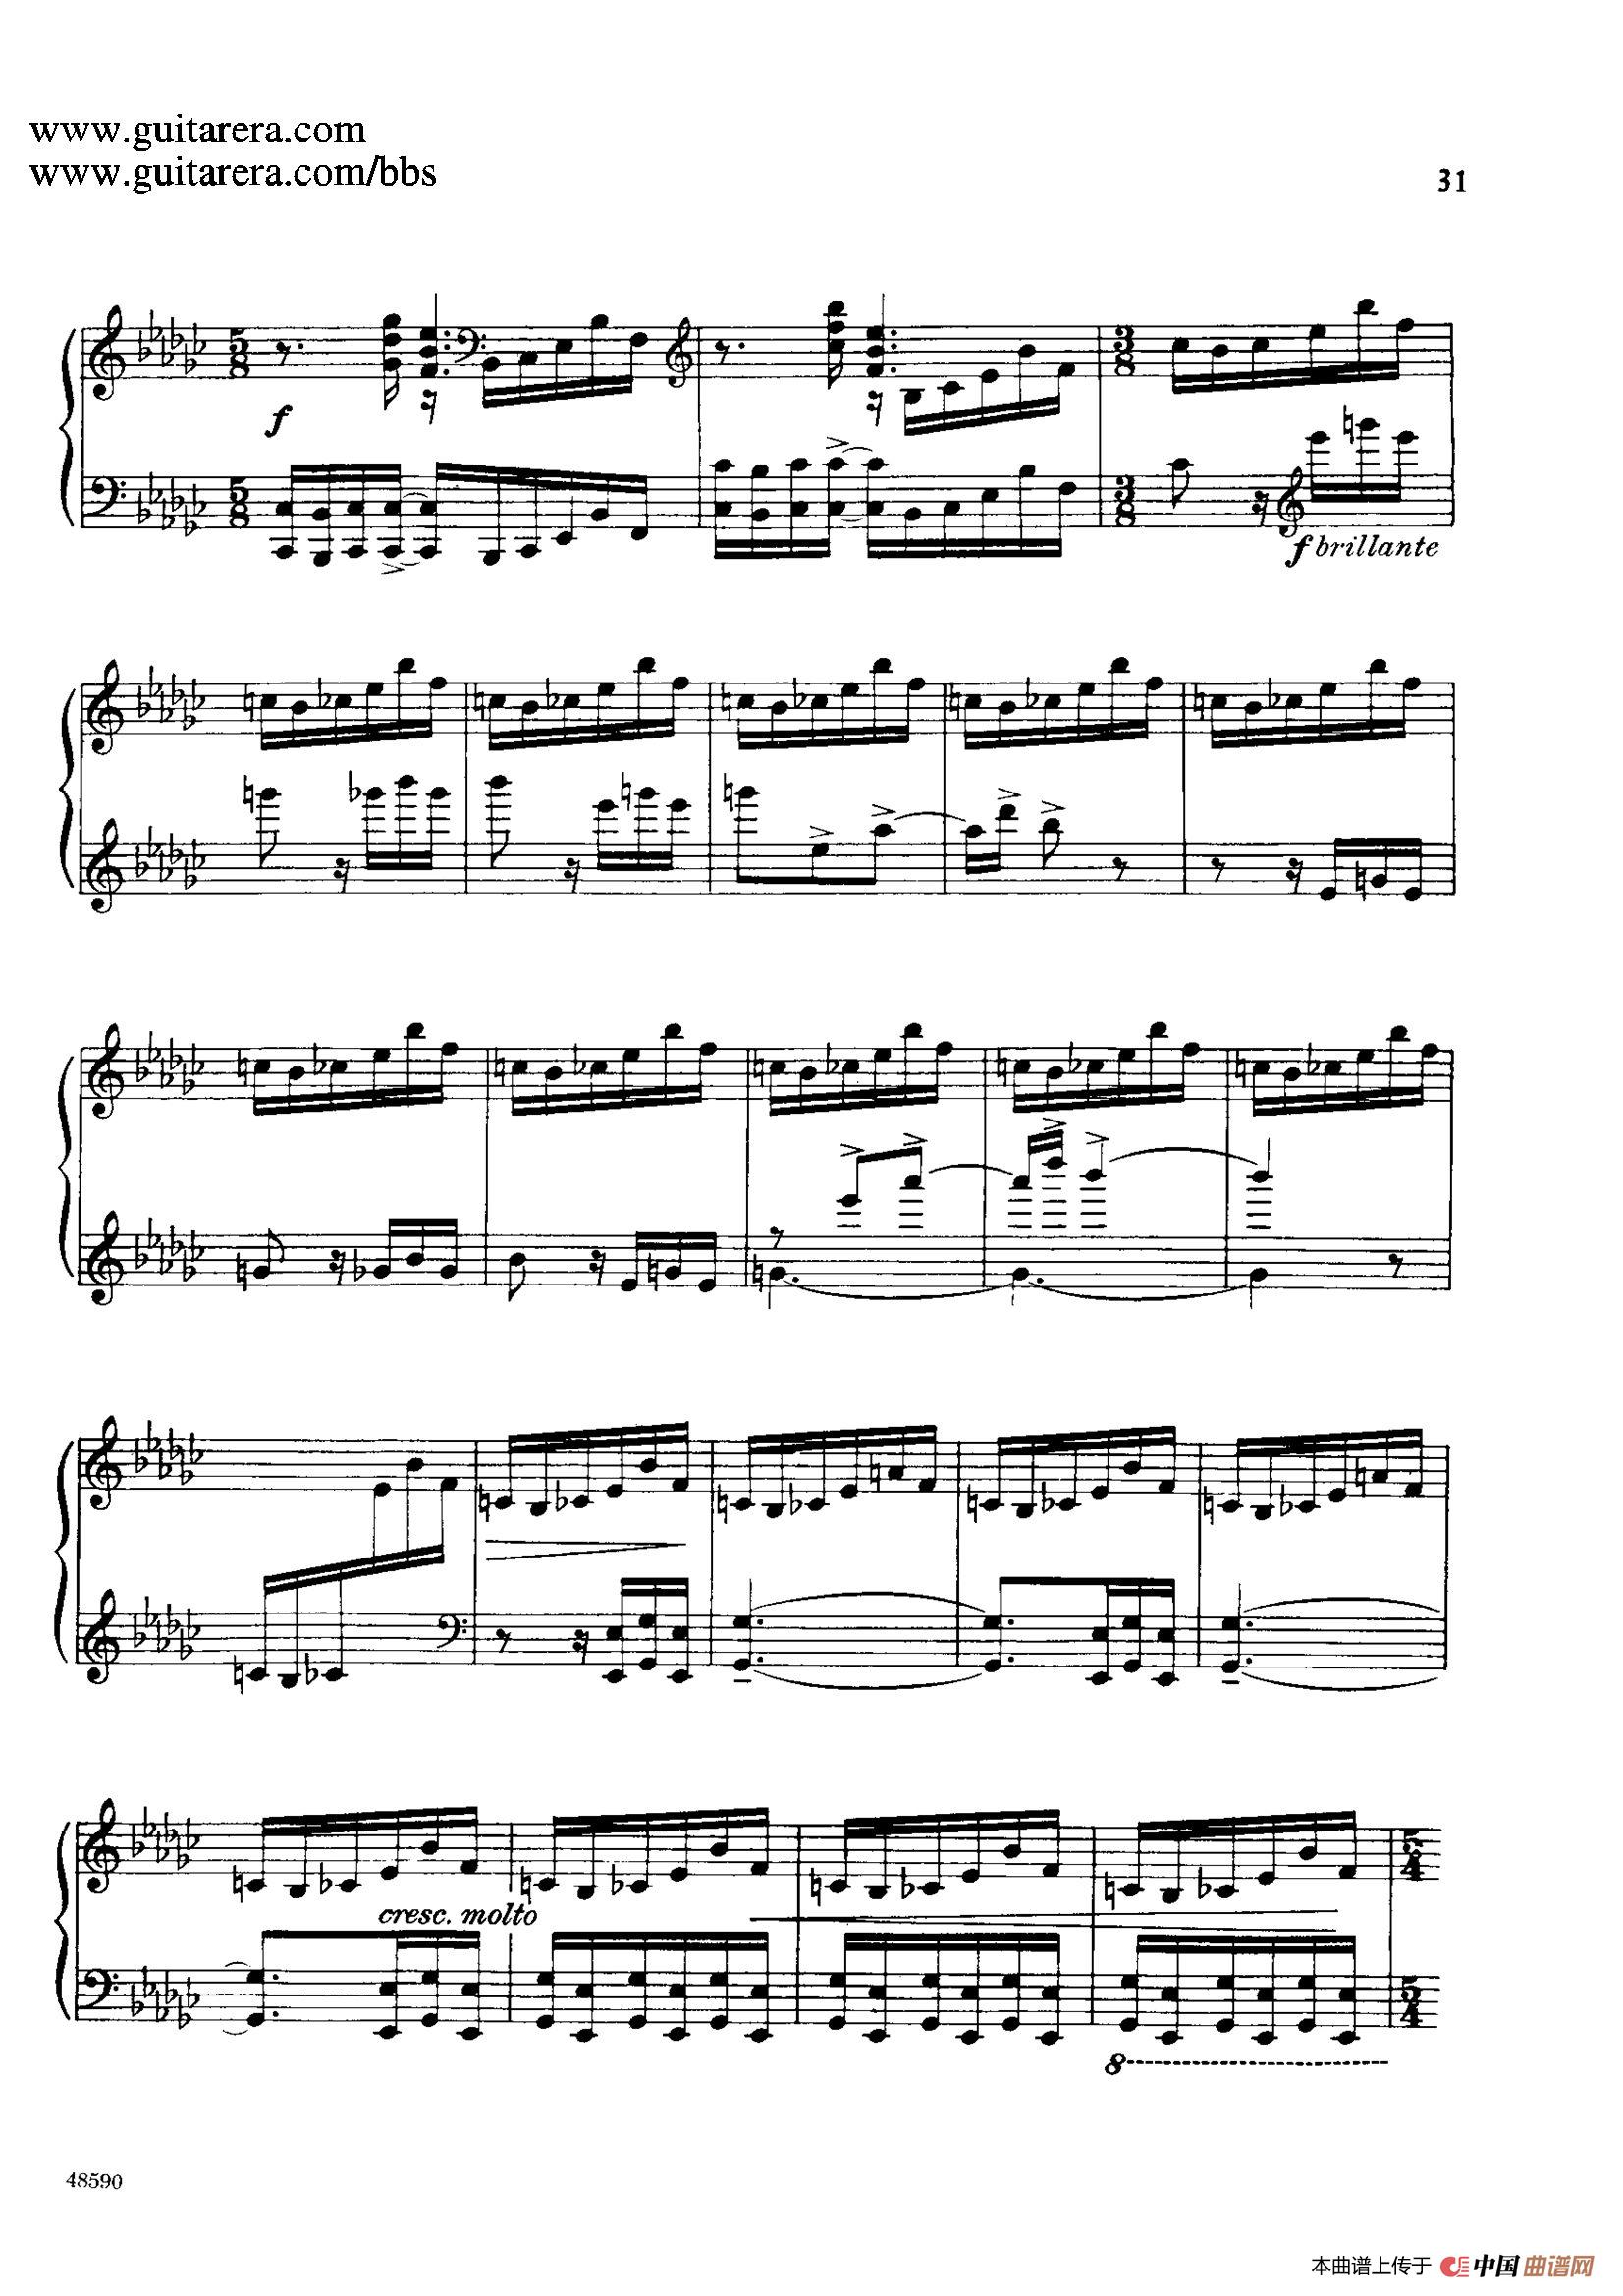 《Piano Sonata Op.26》钢琴曲谱图分享